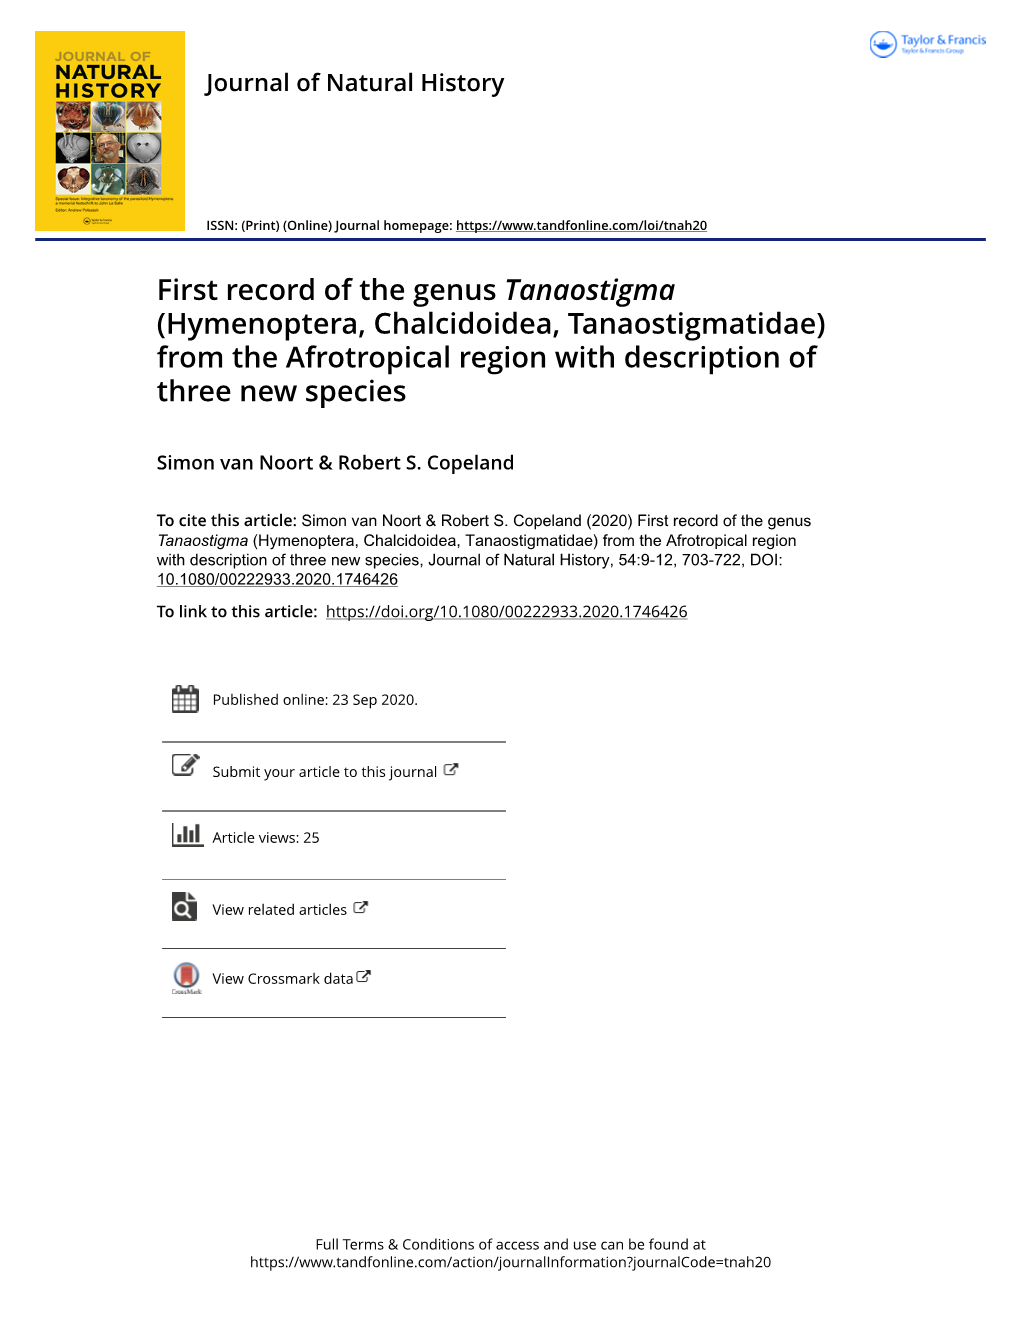 Hymenoptera, Chalcidoidea, Tanaostigmatidae) from the Afrotropical Region with Description of Three New Species